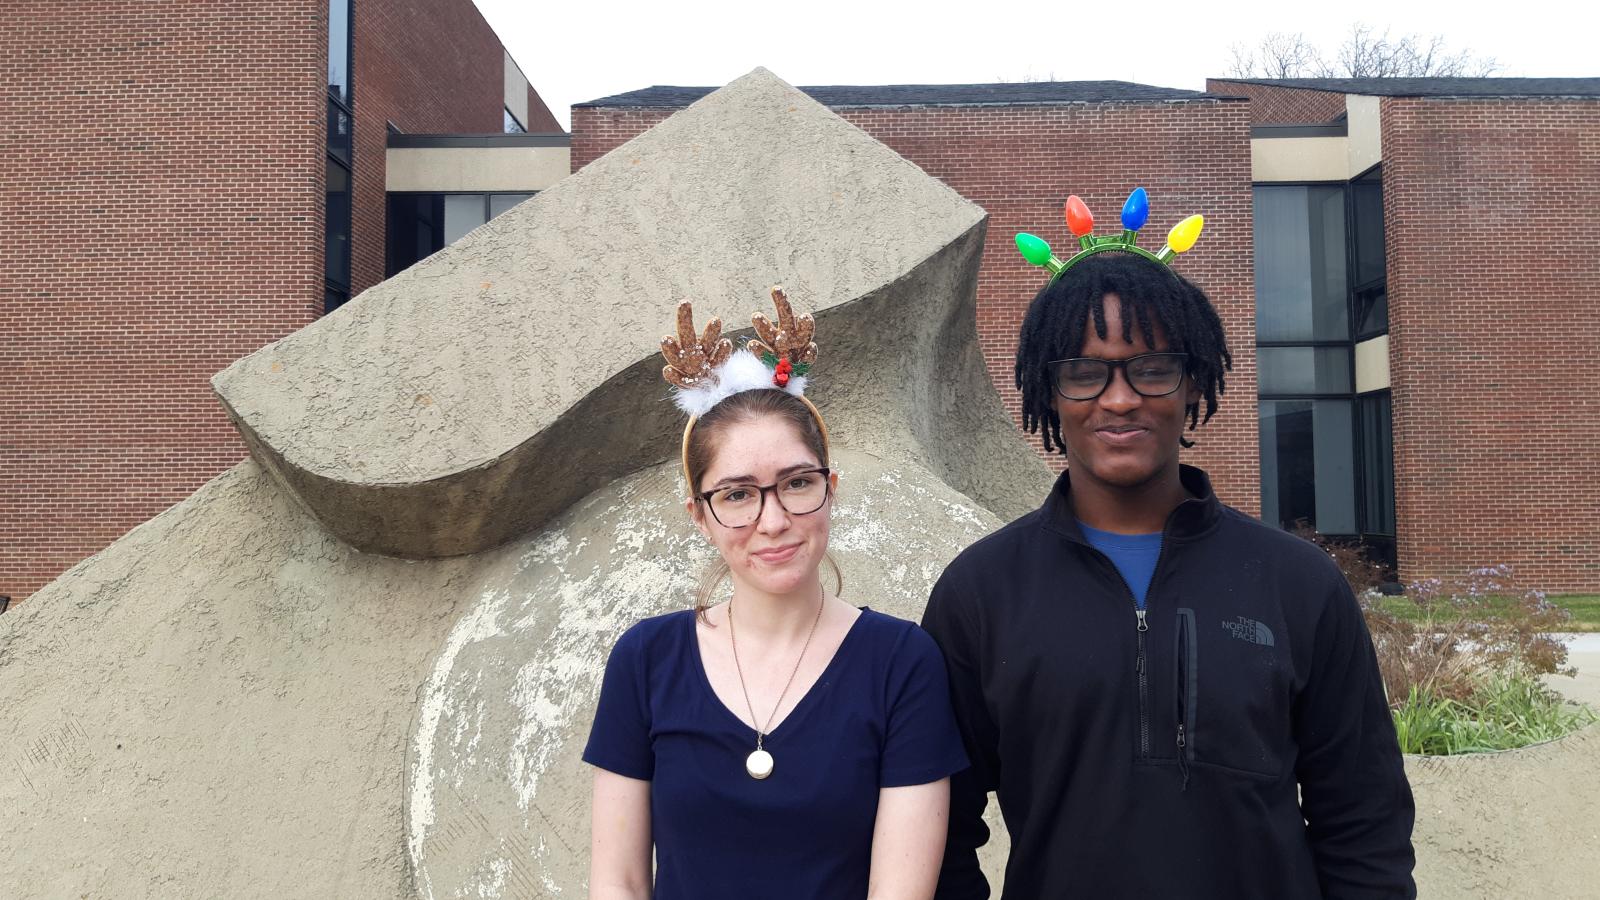 Students with festive Christmas headbands